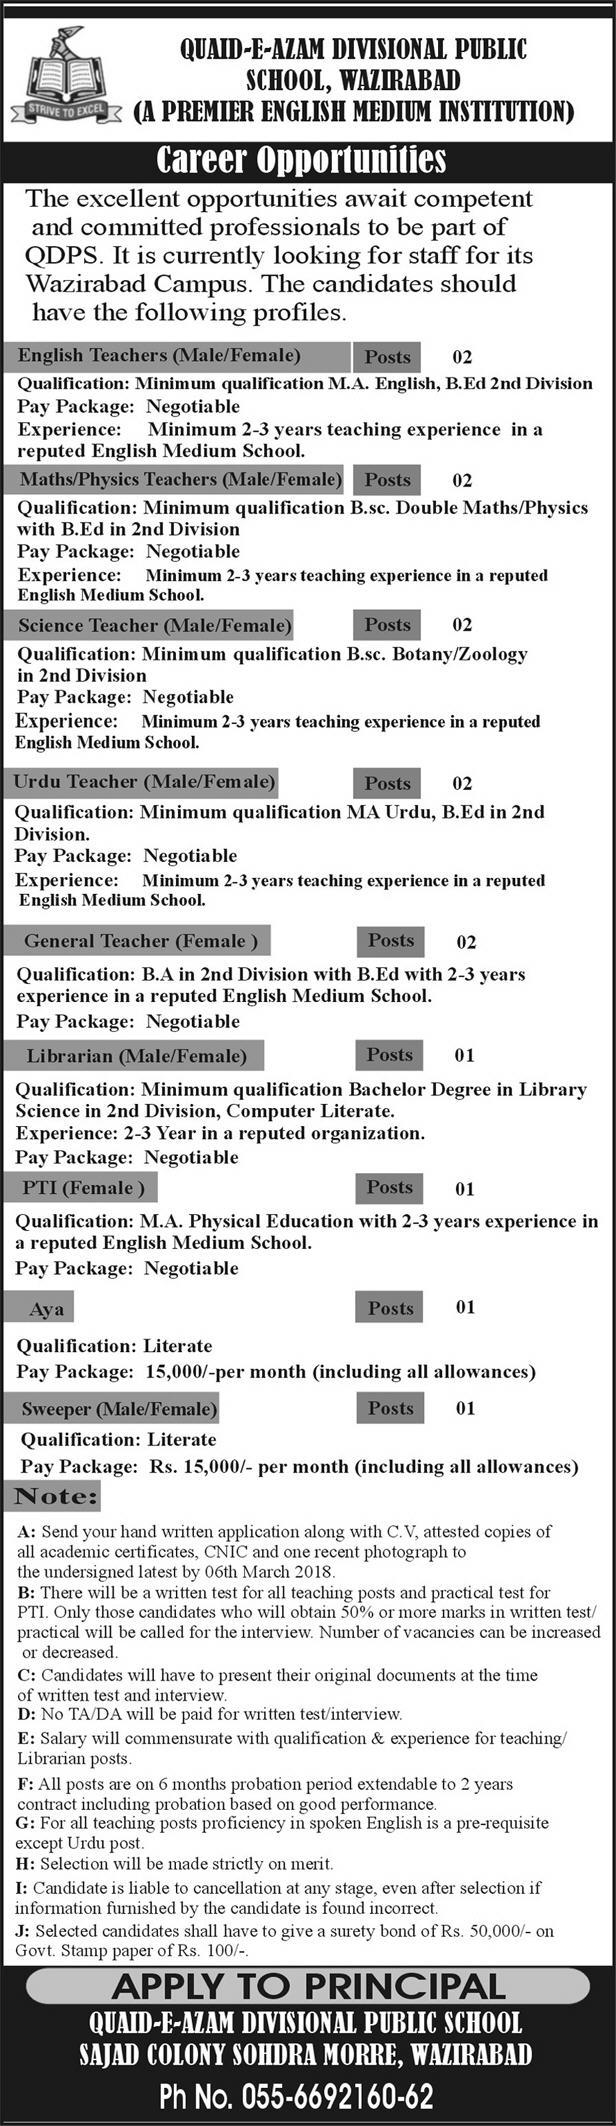 Jobs In Quaid E Azam Divisional Public School 19 Feb 2018